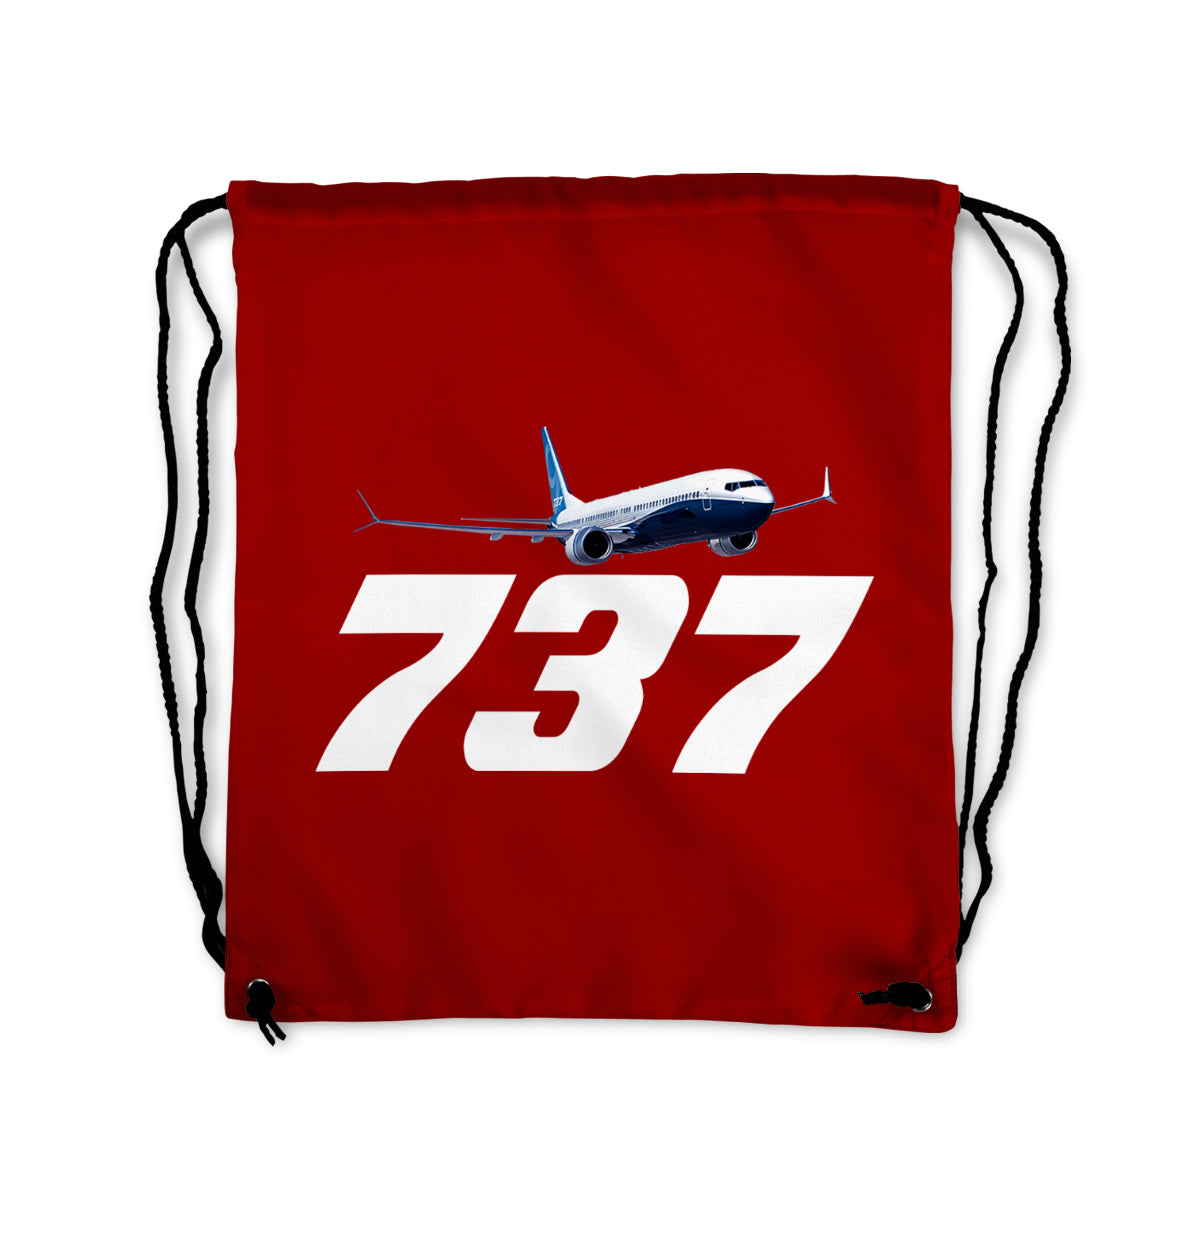 Super Boeing 737-800 Designed Drawstring Bags